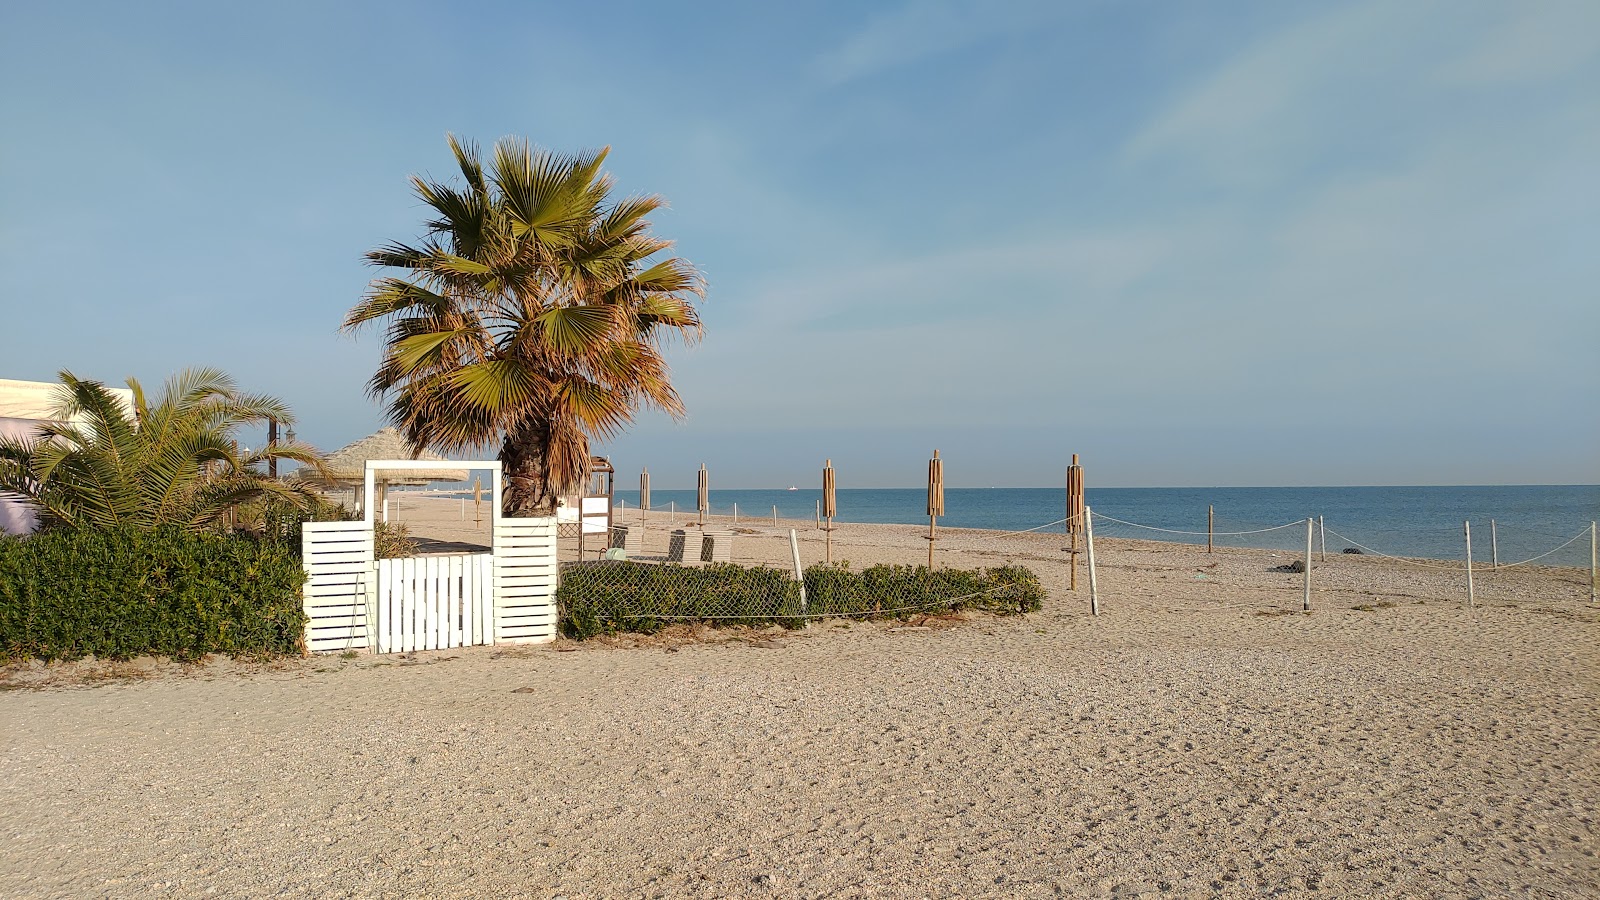 Photo of Spiaggia Sergio Piermanni amenities area